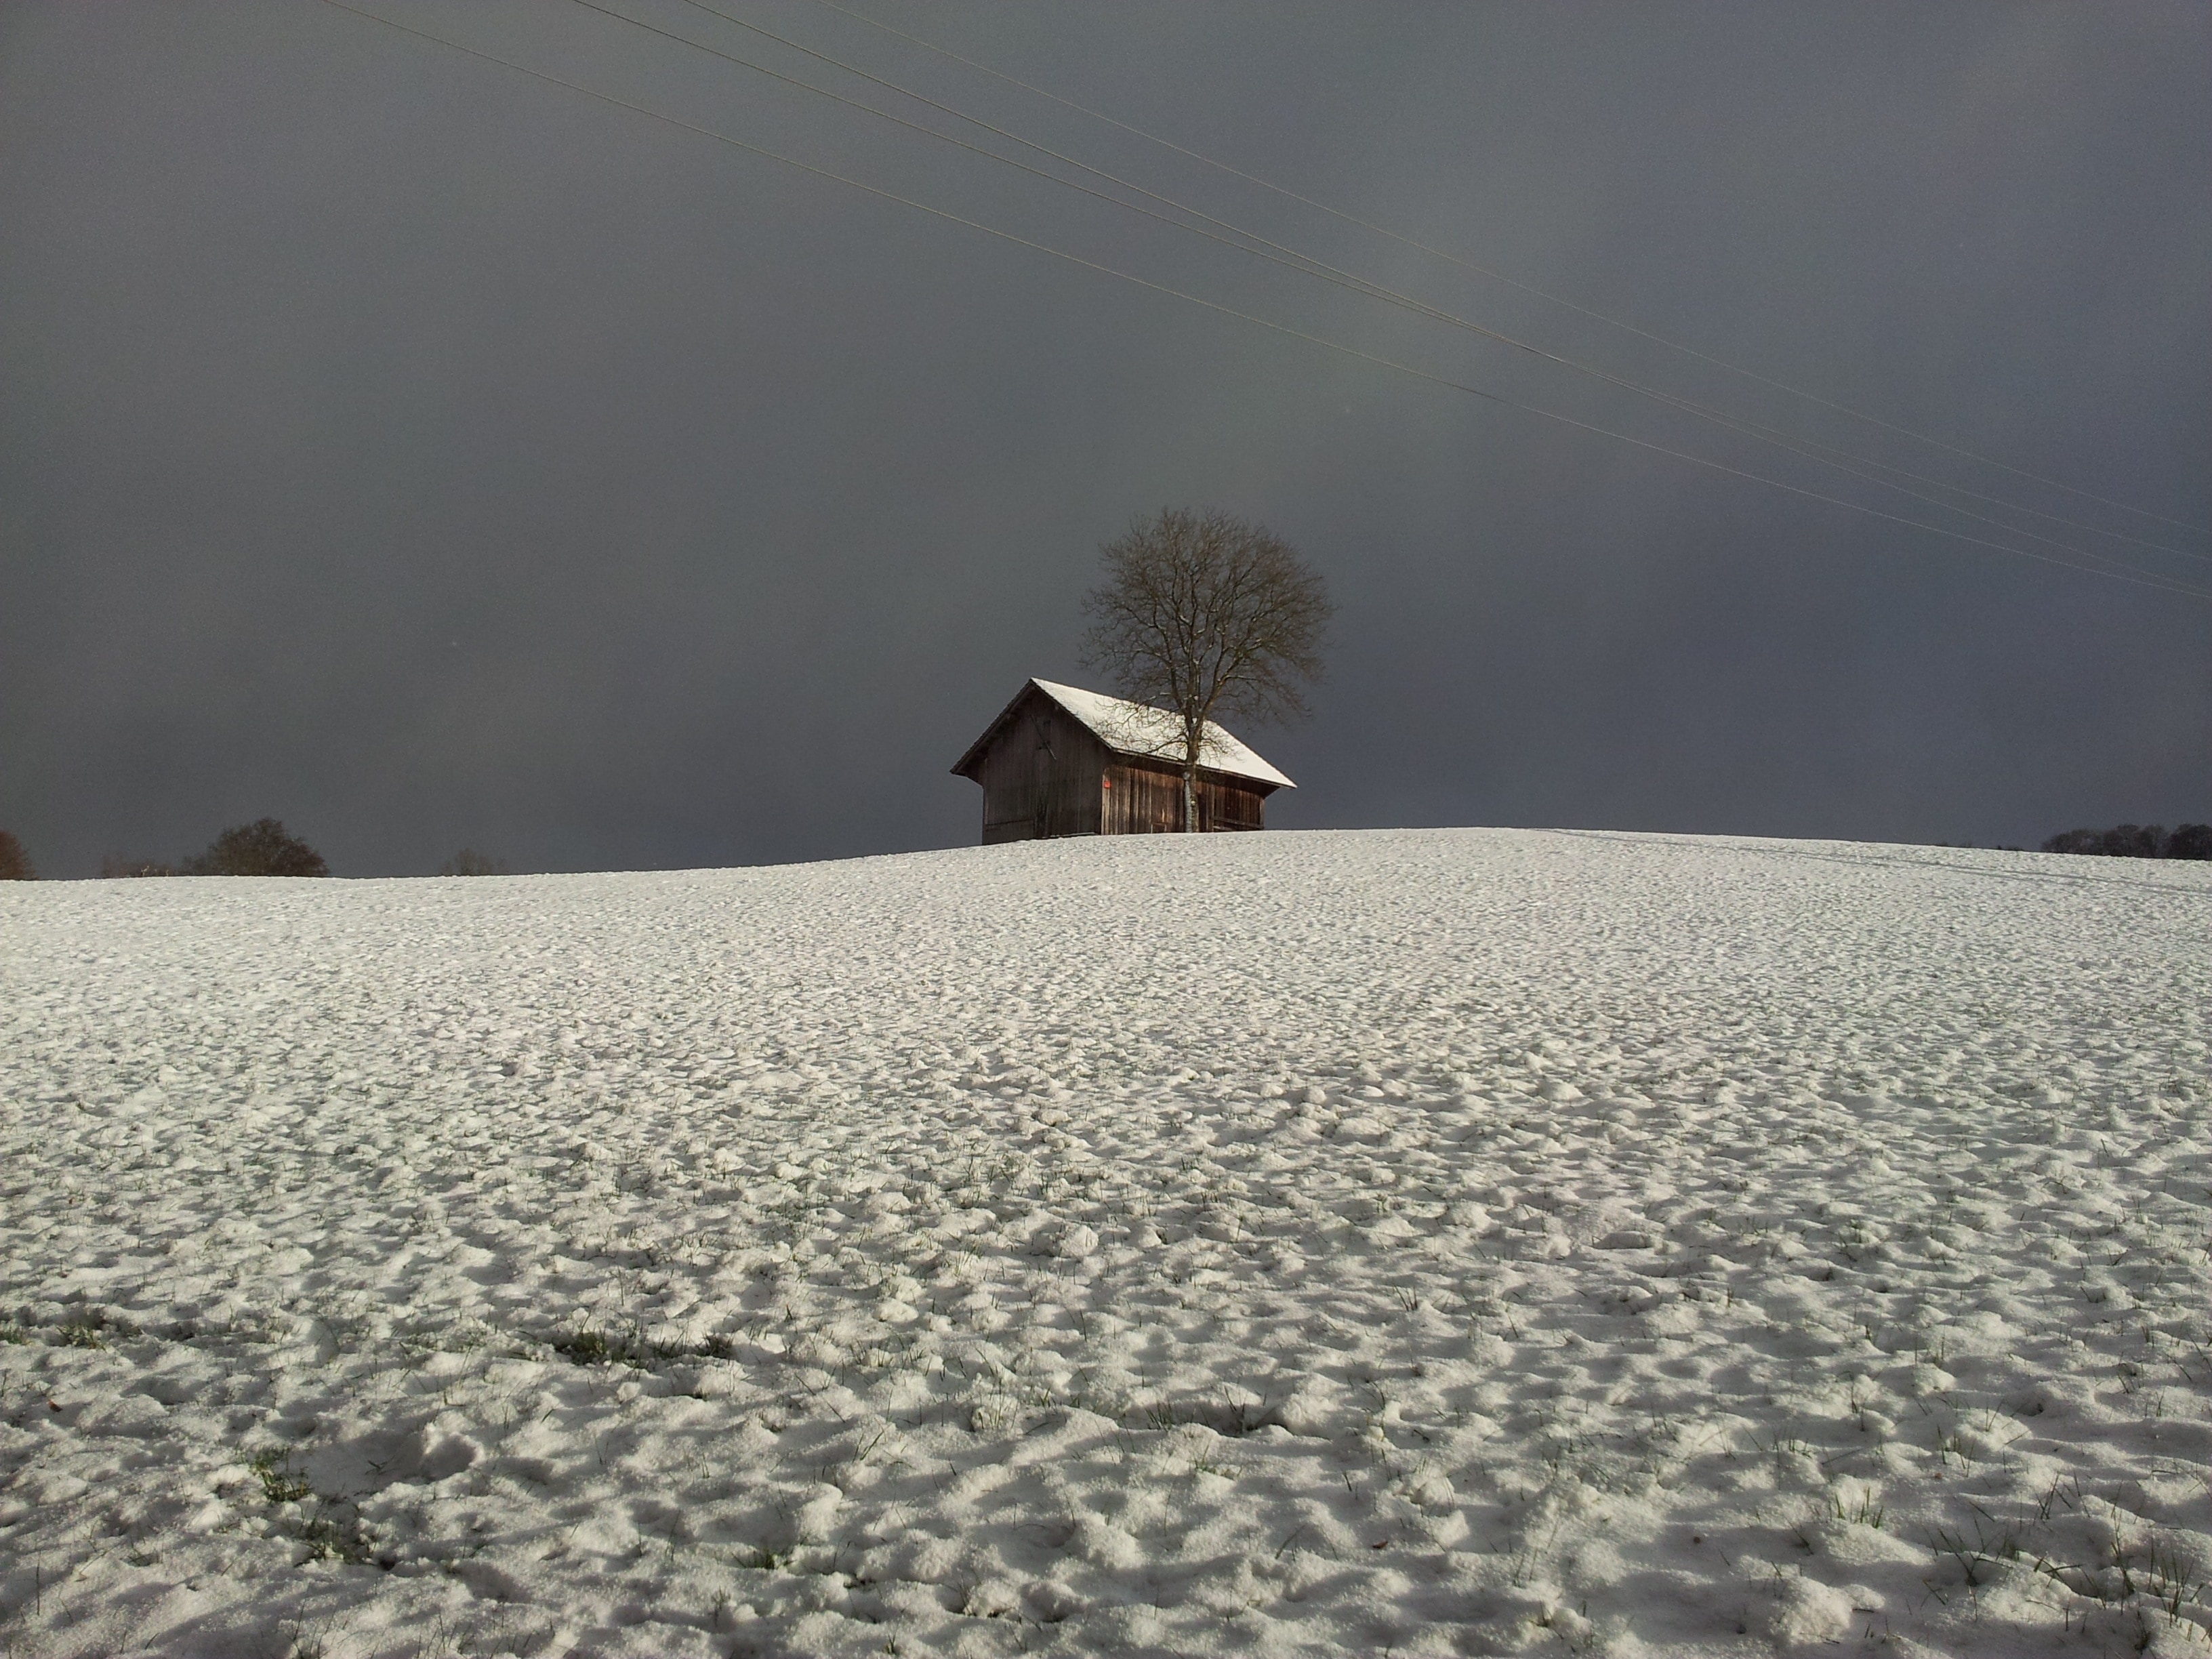 Snowfield, Wintry, Snow Landscape, built structure, house